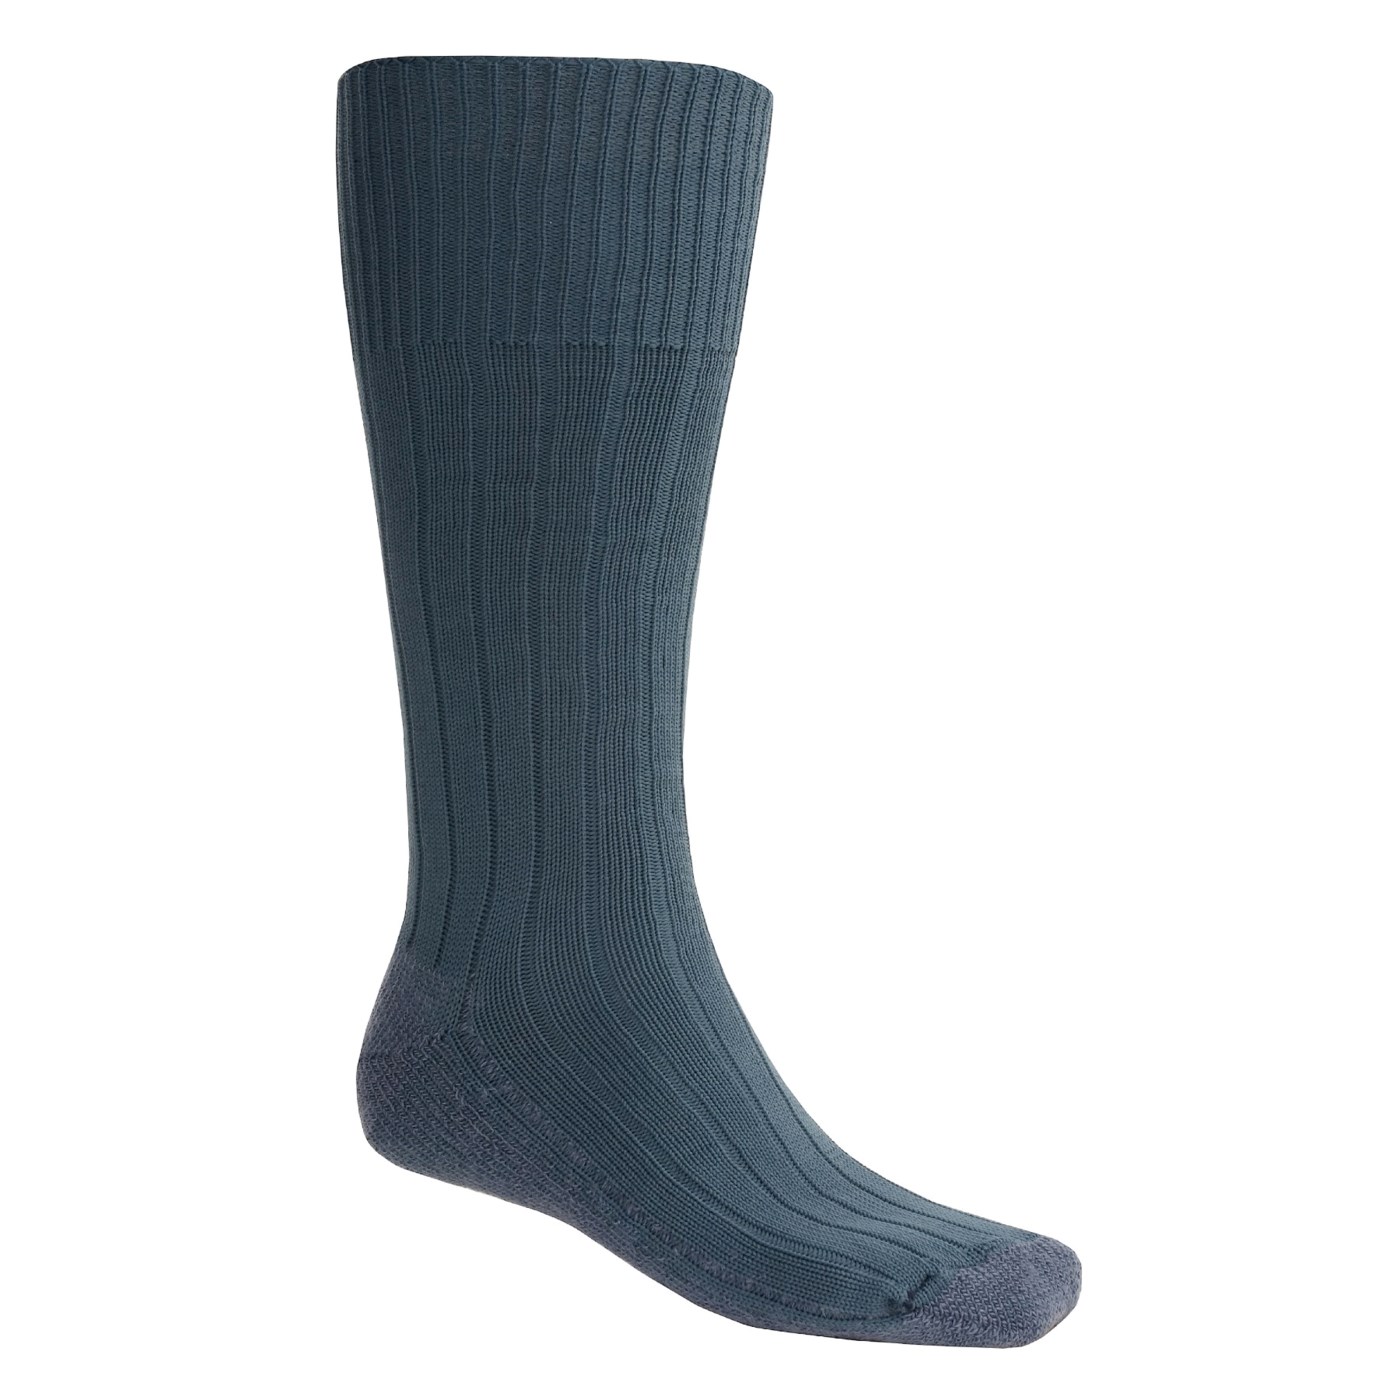 Bridgedale Pathfinder Socks (For Men and Women) 50